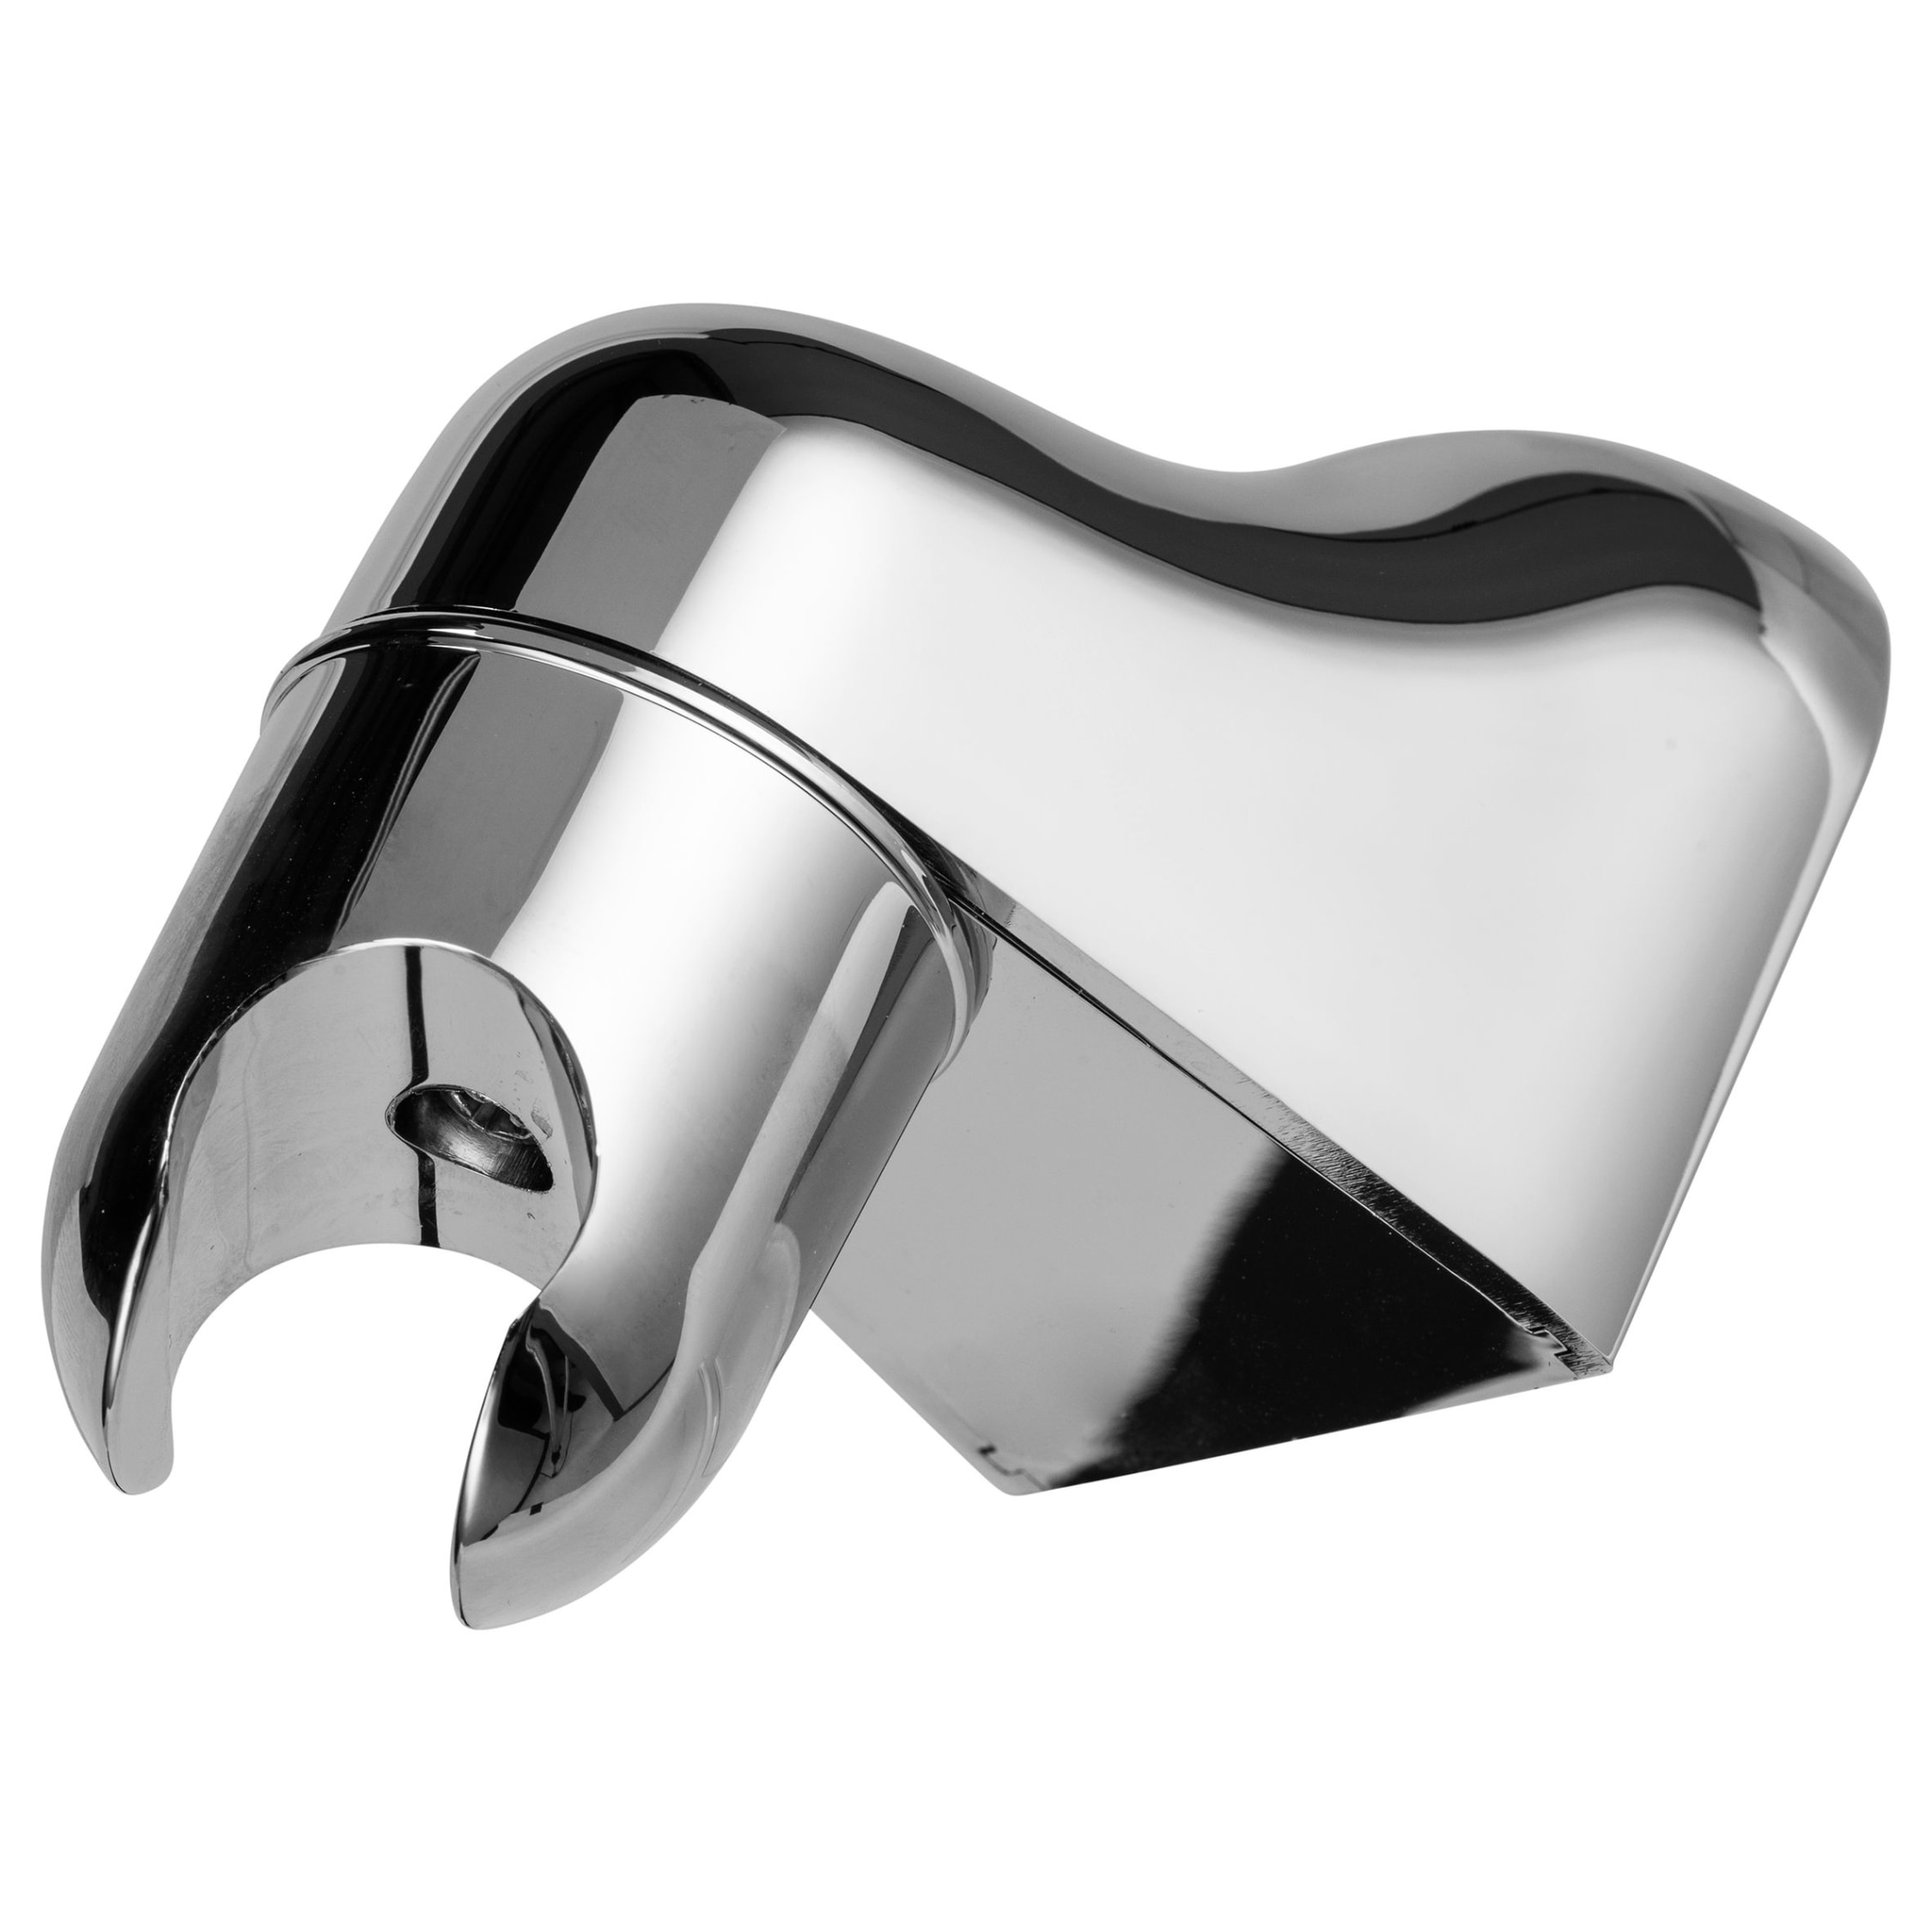 Hotsellhome New Shower Head Handset Holder Chrome Bathroom Wall Mount Adjustable Suction Bracket 